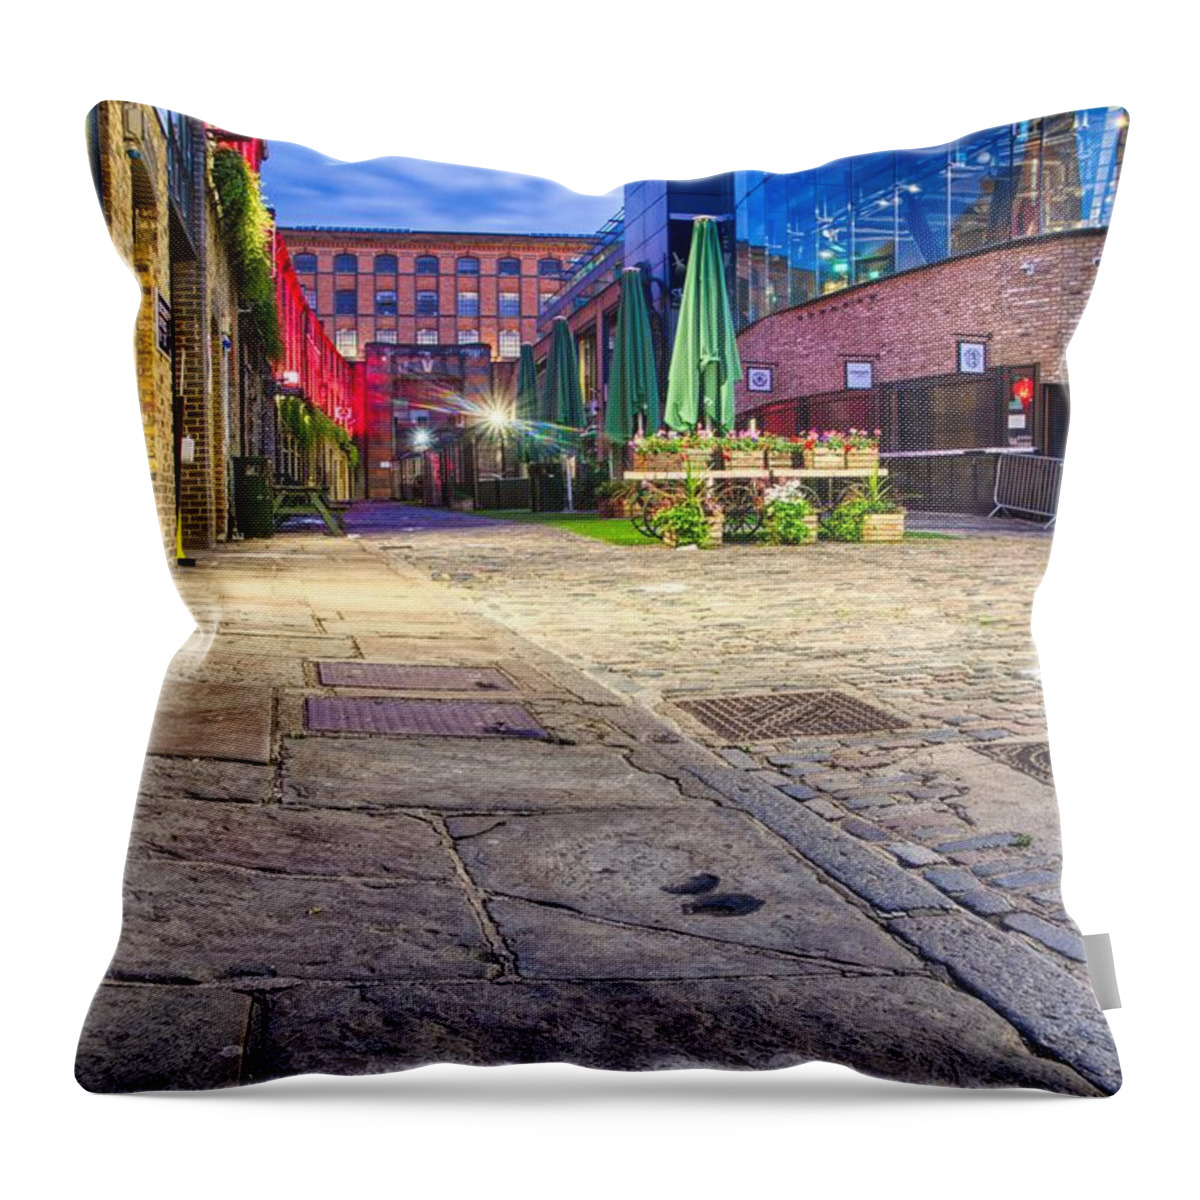 Camden Throw Pillow featuring the photograph Stables Market Camden Town by Raymond Hill